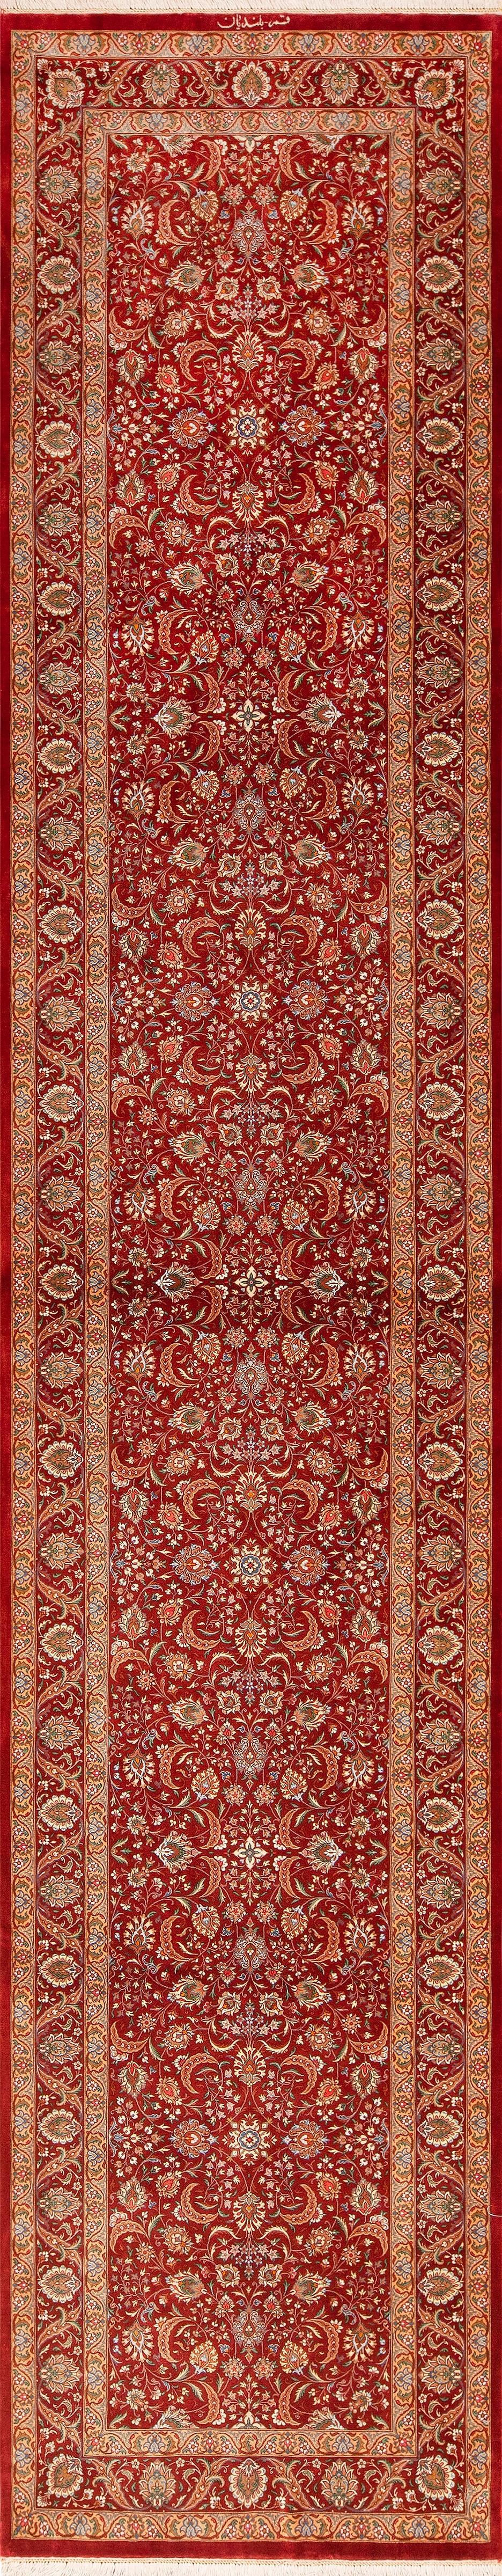 Red Fine Floral Luxurious Vintage Persian Qum Silk Hallway Runner Rug, country of origin: Persian Rugs, Circa date: Vintage